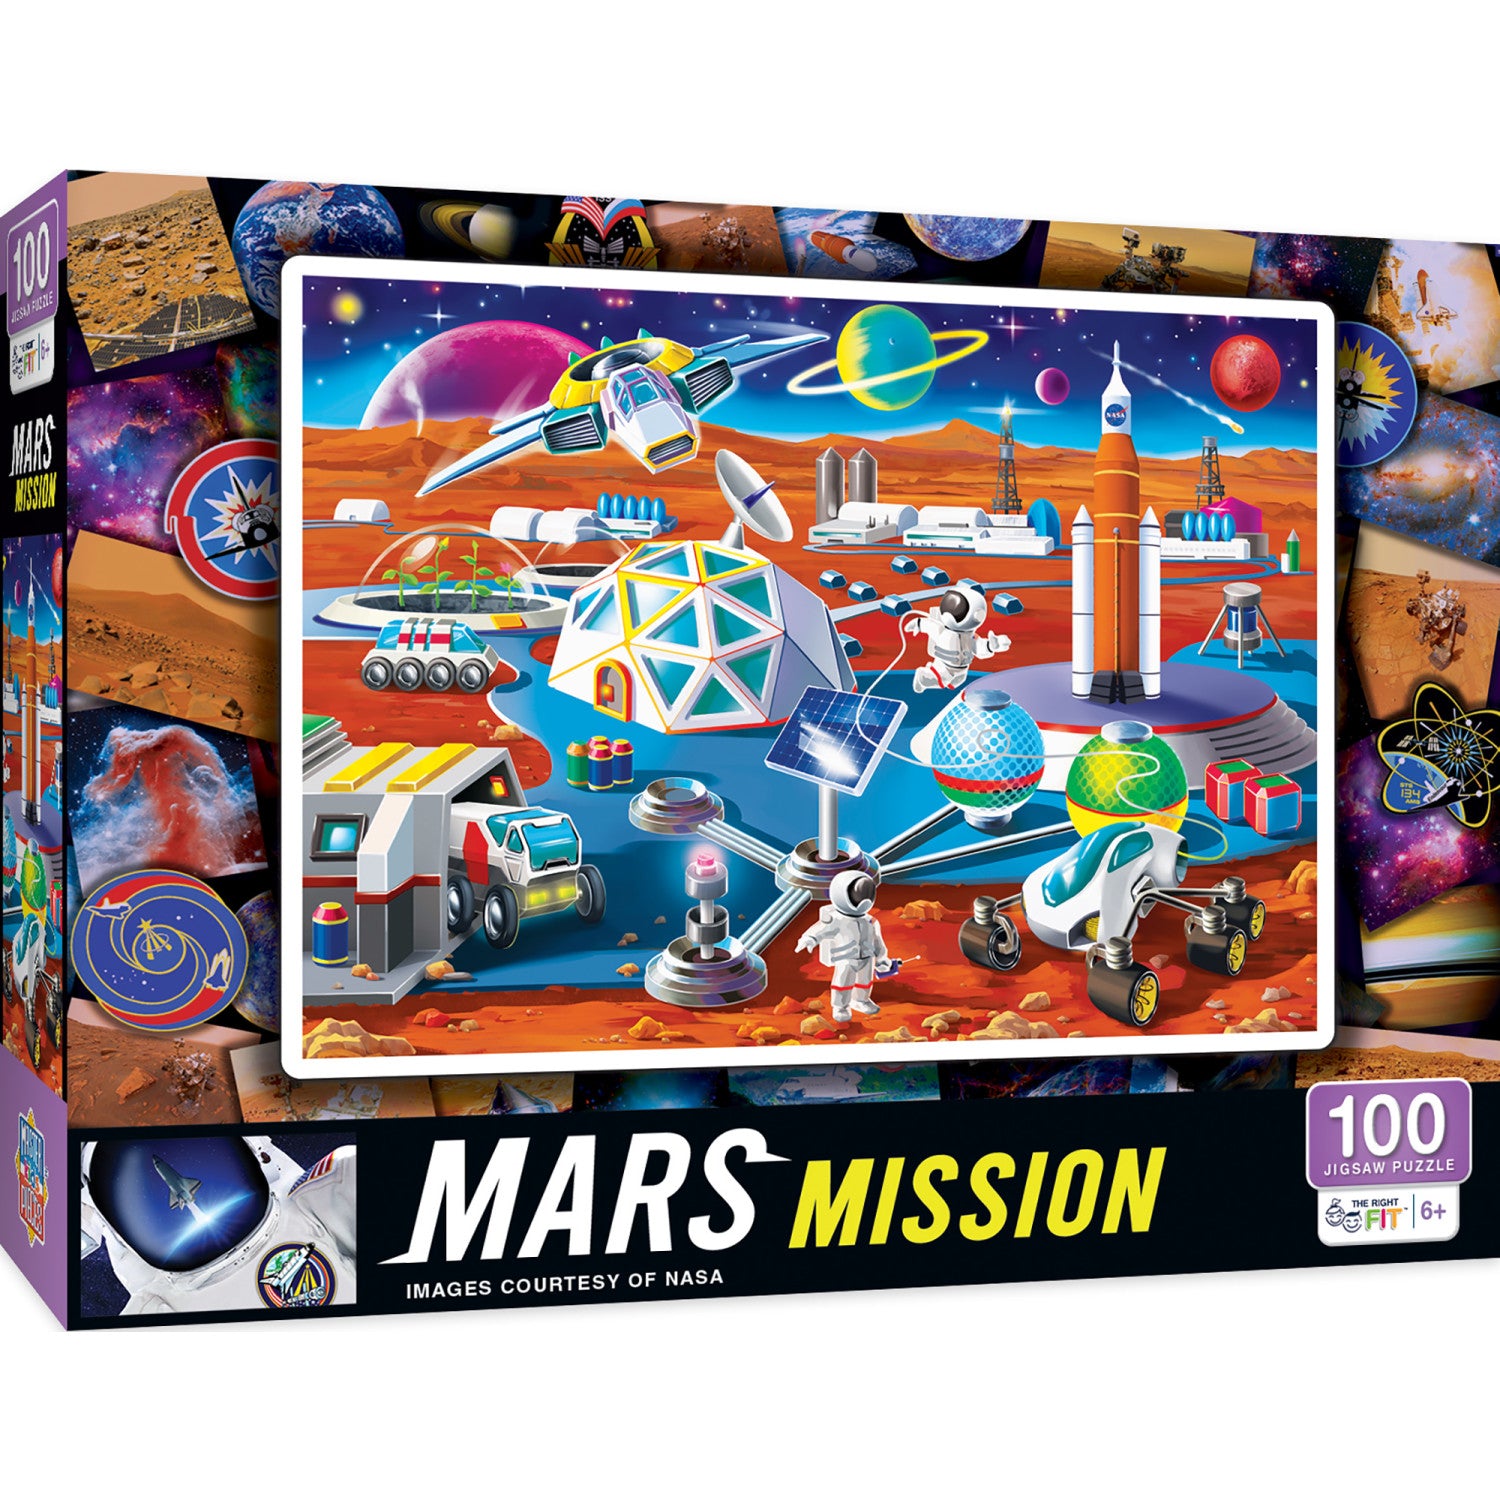 NASA - Mars Mission 100 Piece Jigsaw Puzzle